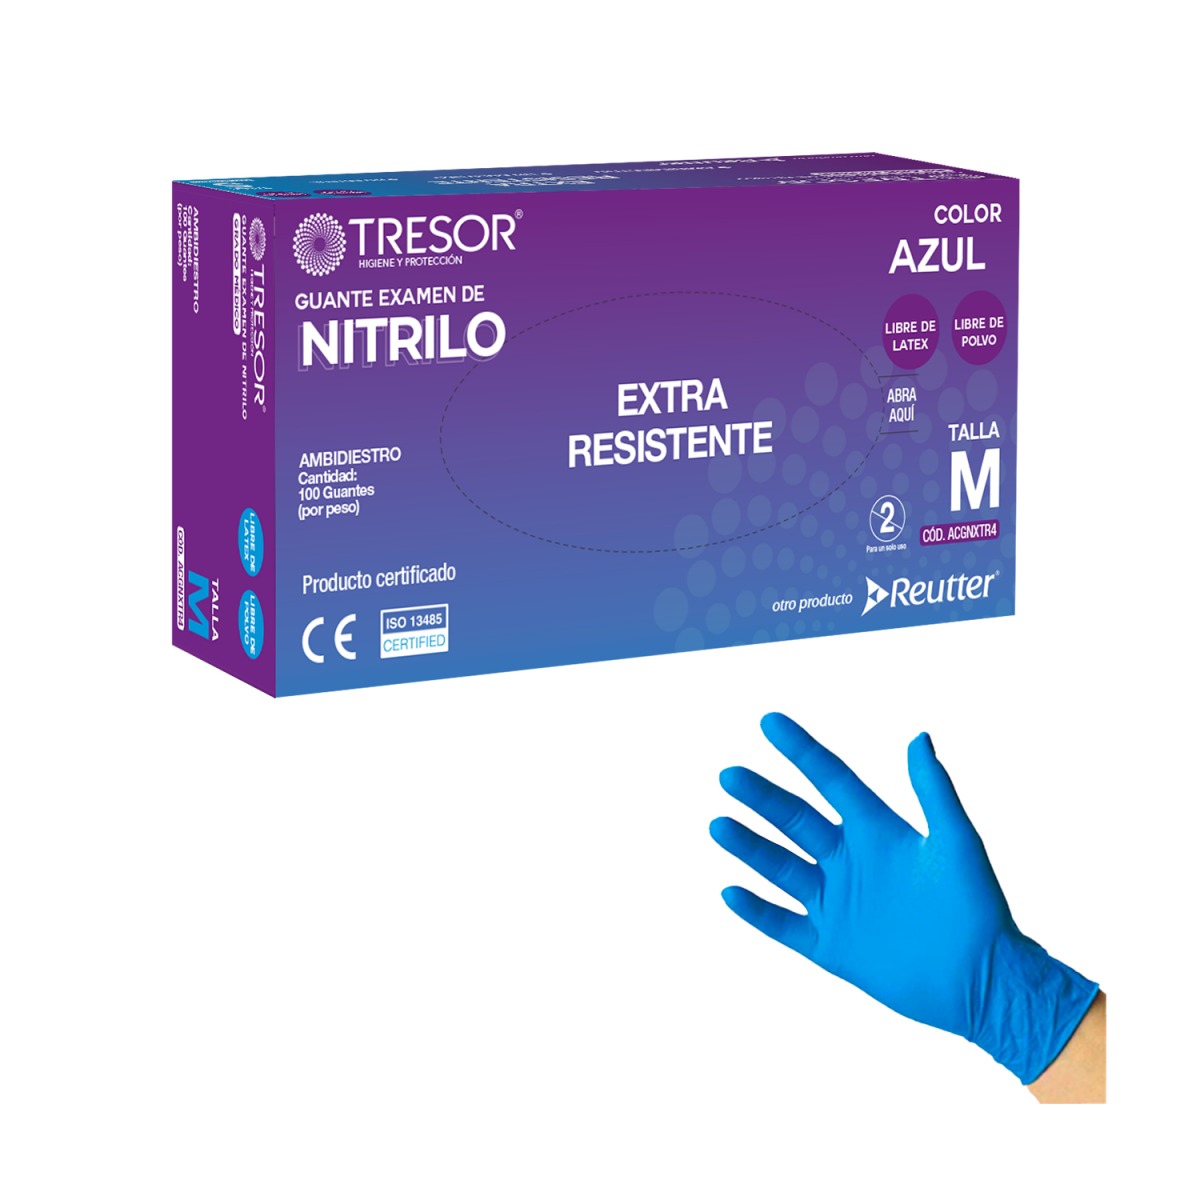 Guante examen nitrilo extra resistente